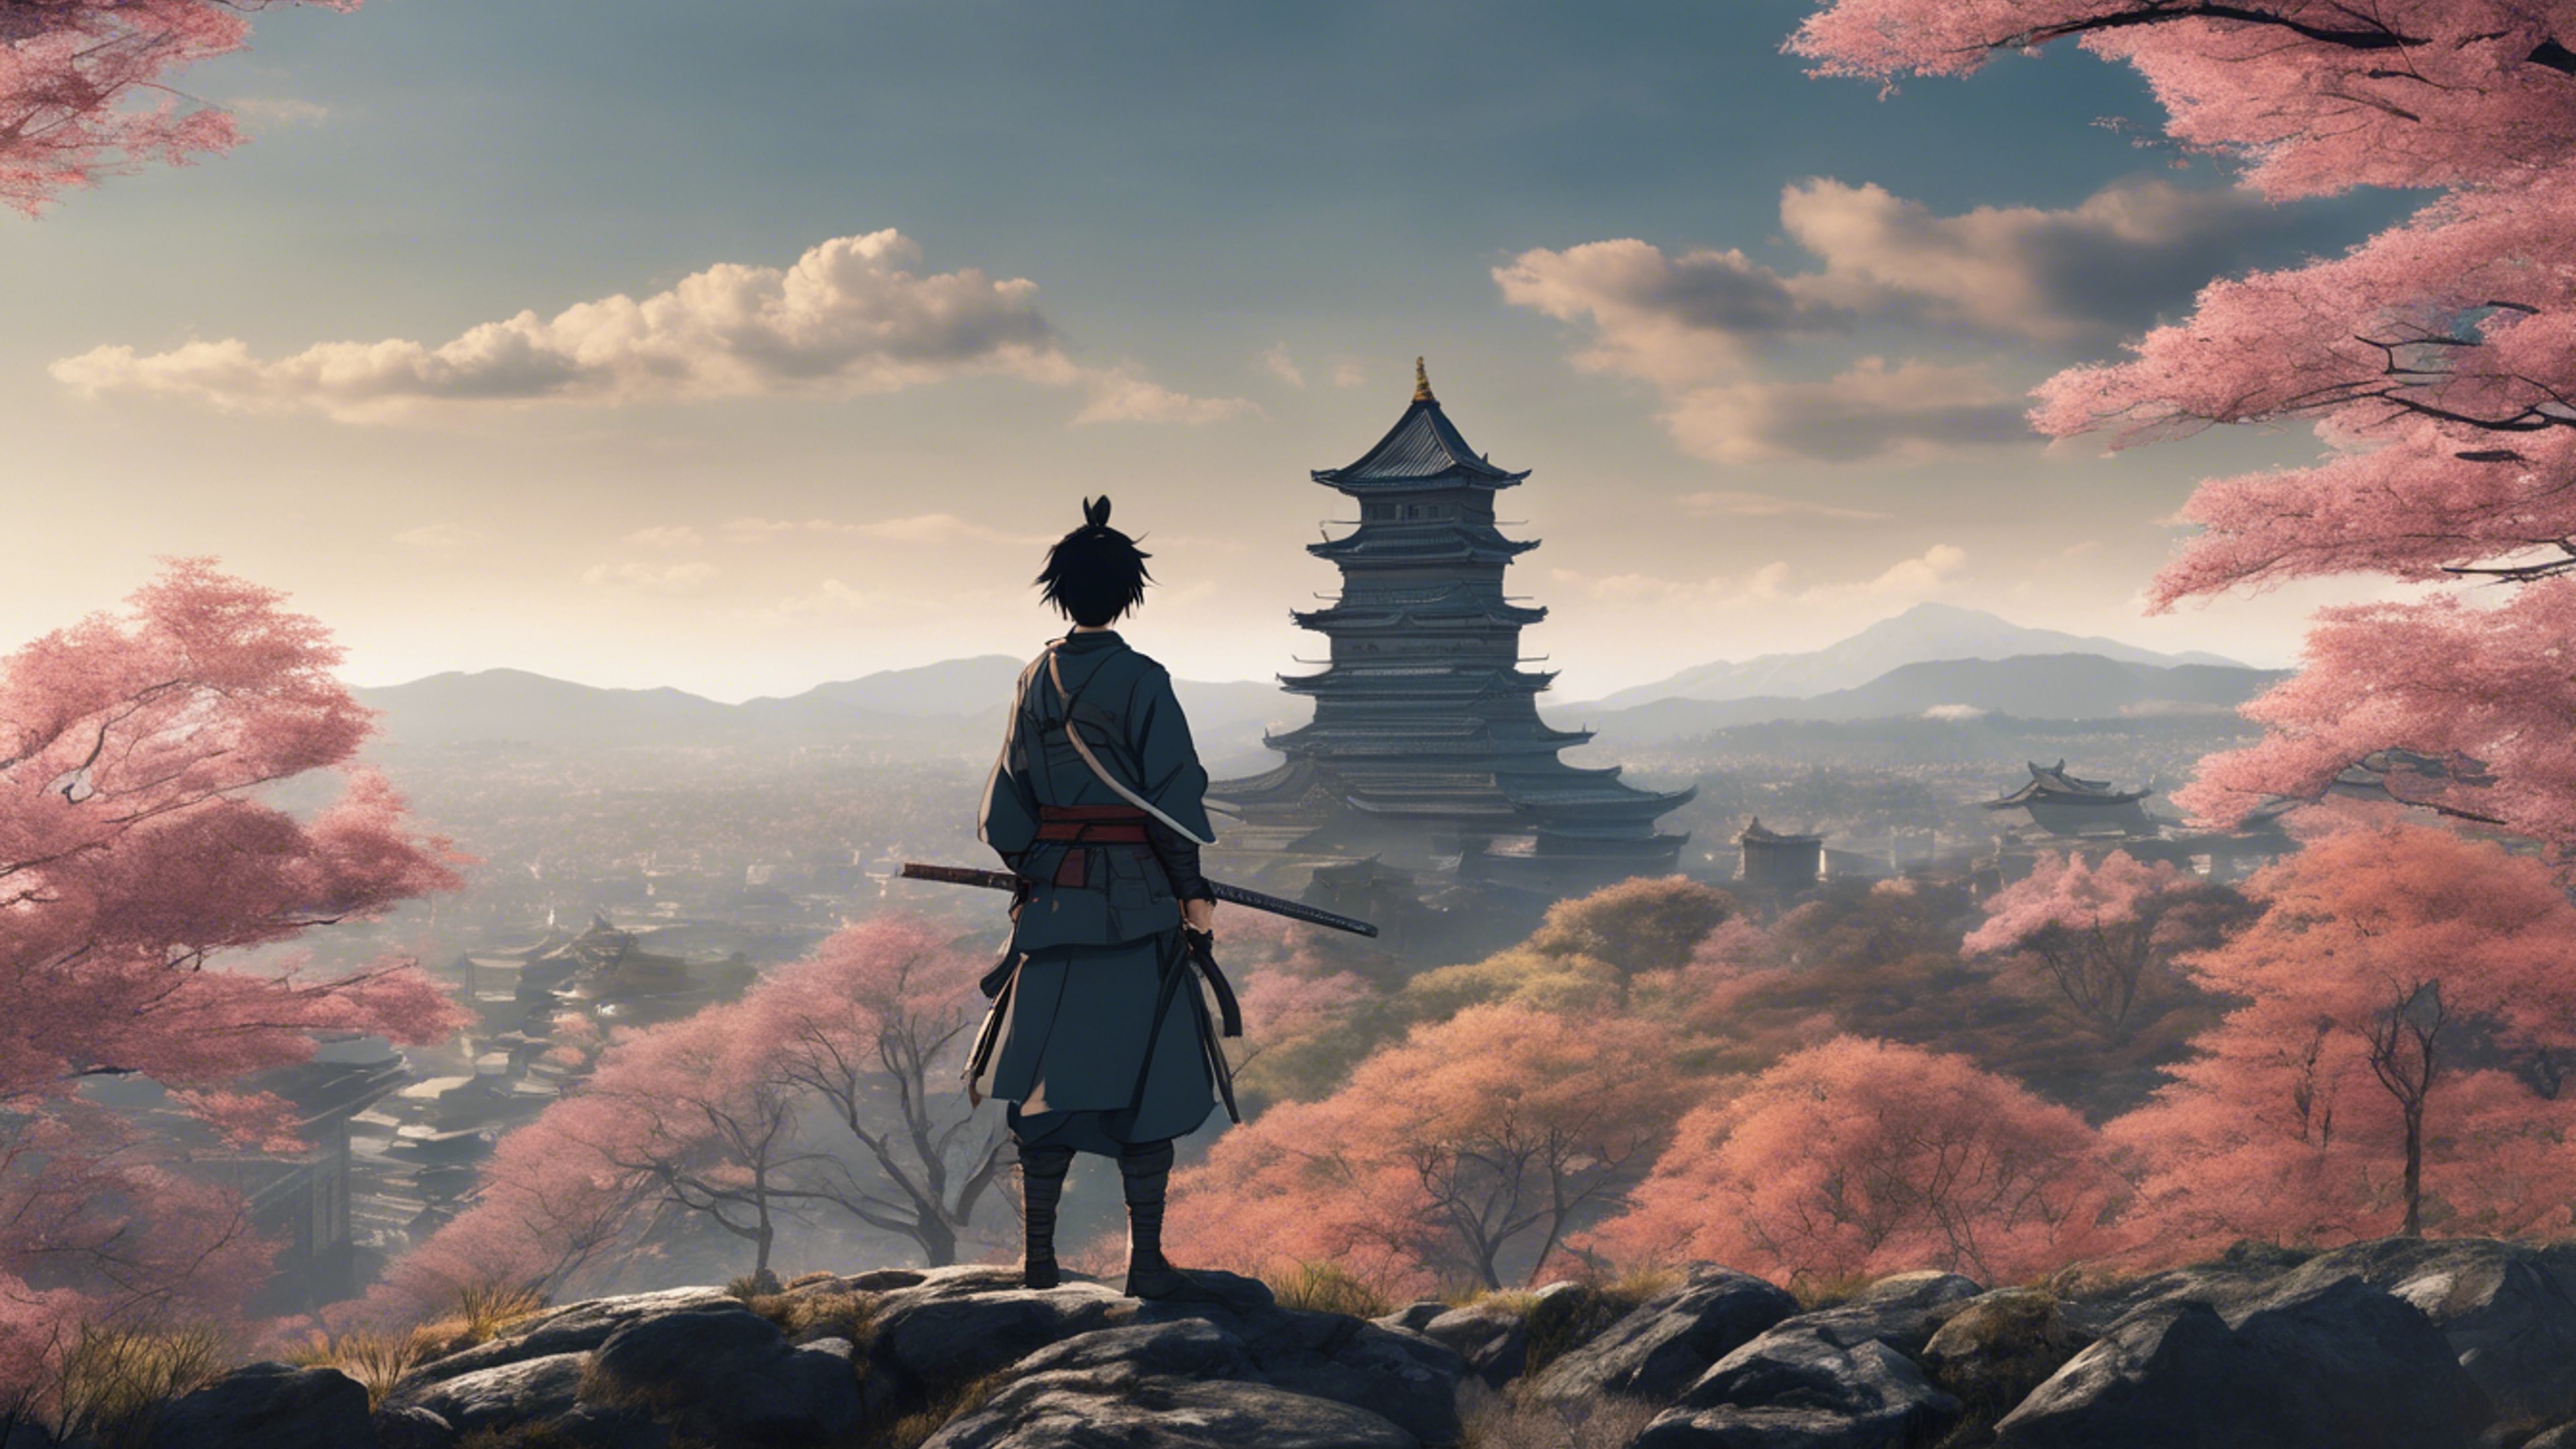 Anime samurai boy standing on a rocky hillside and looking towards a feudal-era Japanese castle. Hintergrund[9402636a9a6e4b8c90bb]